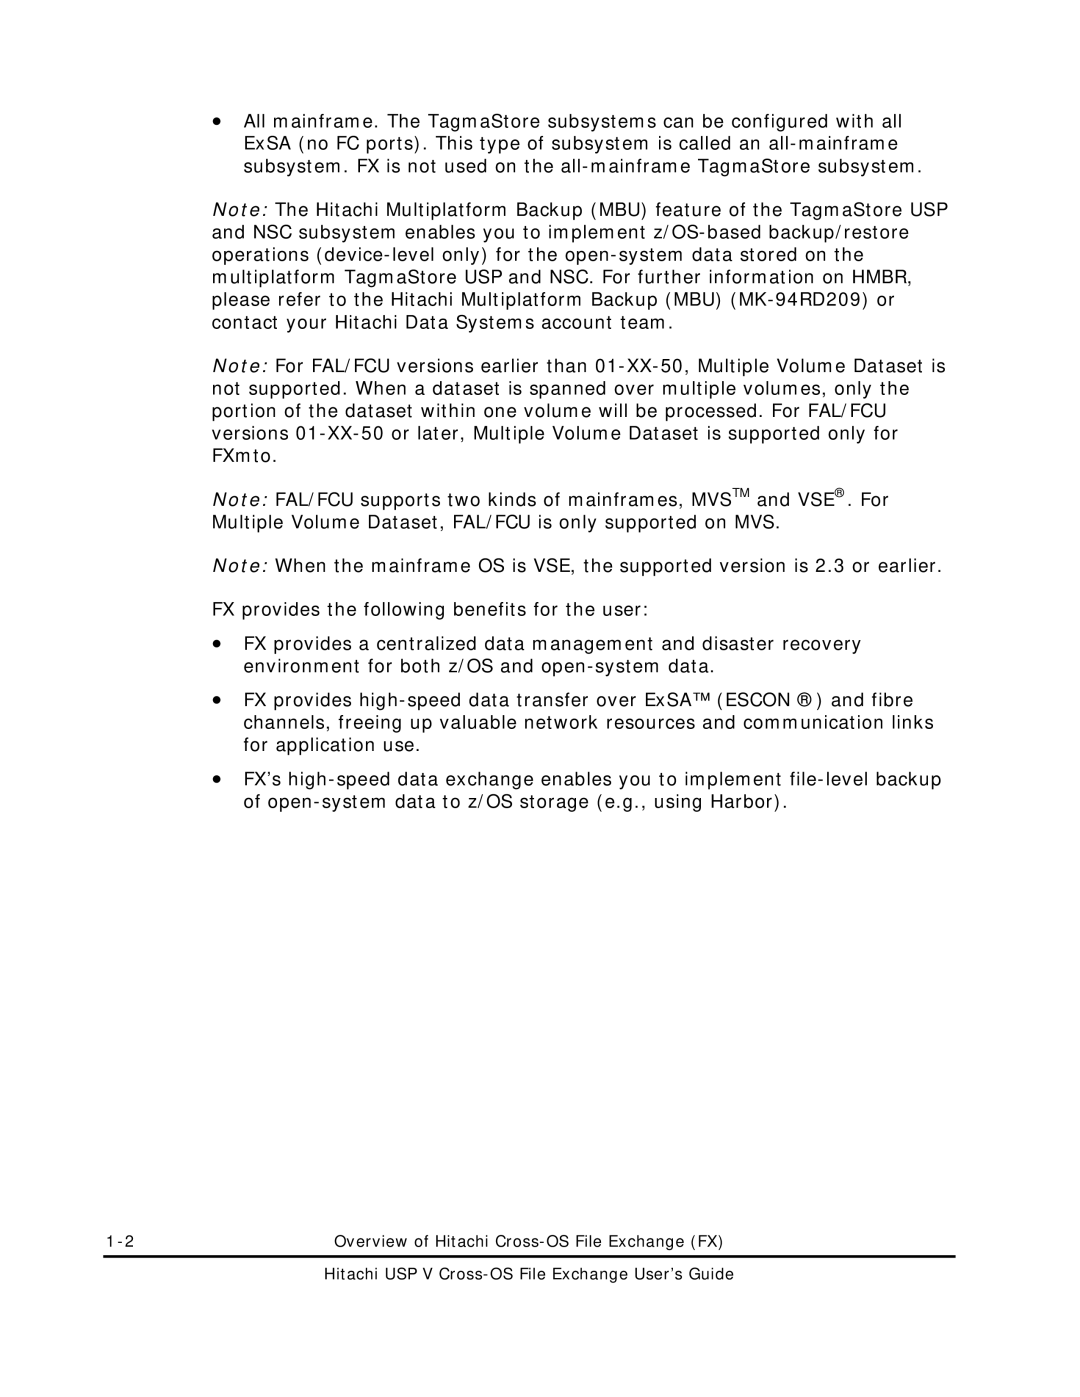 Hitachi MK-96RD647-01 manual Overview of Hitachi Cross-OS File Exchange FX 